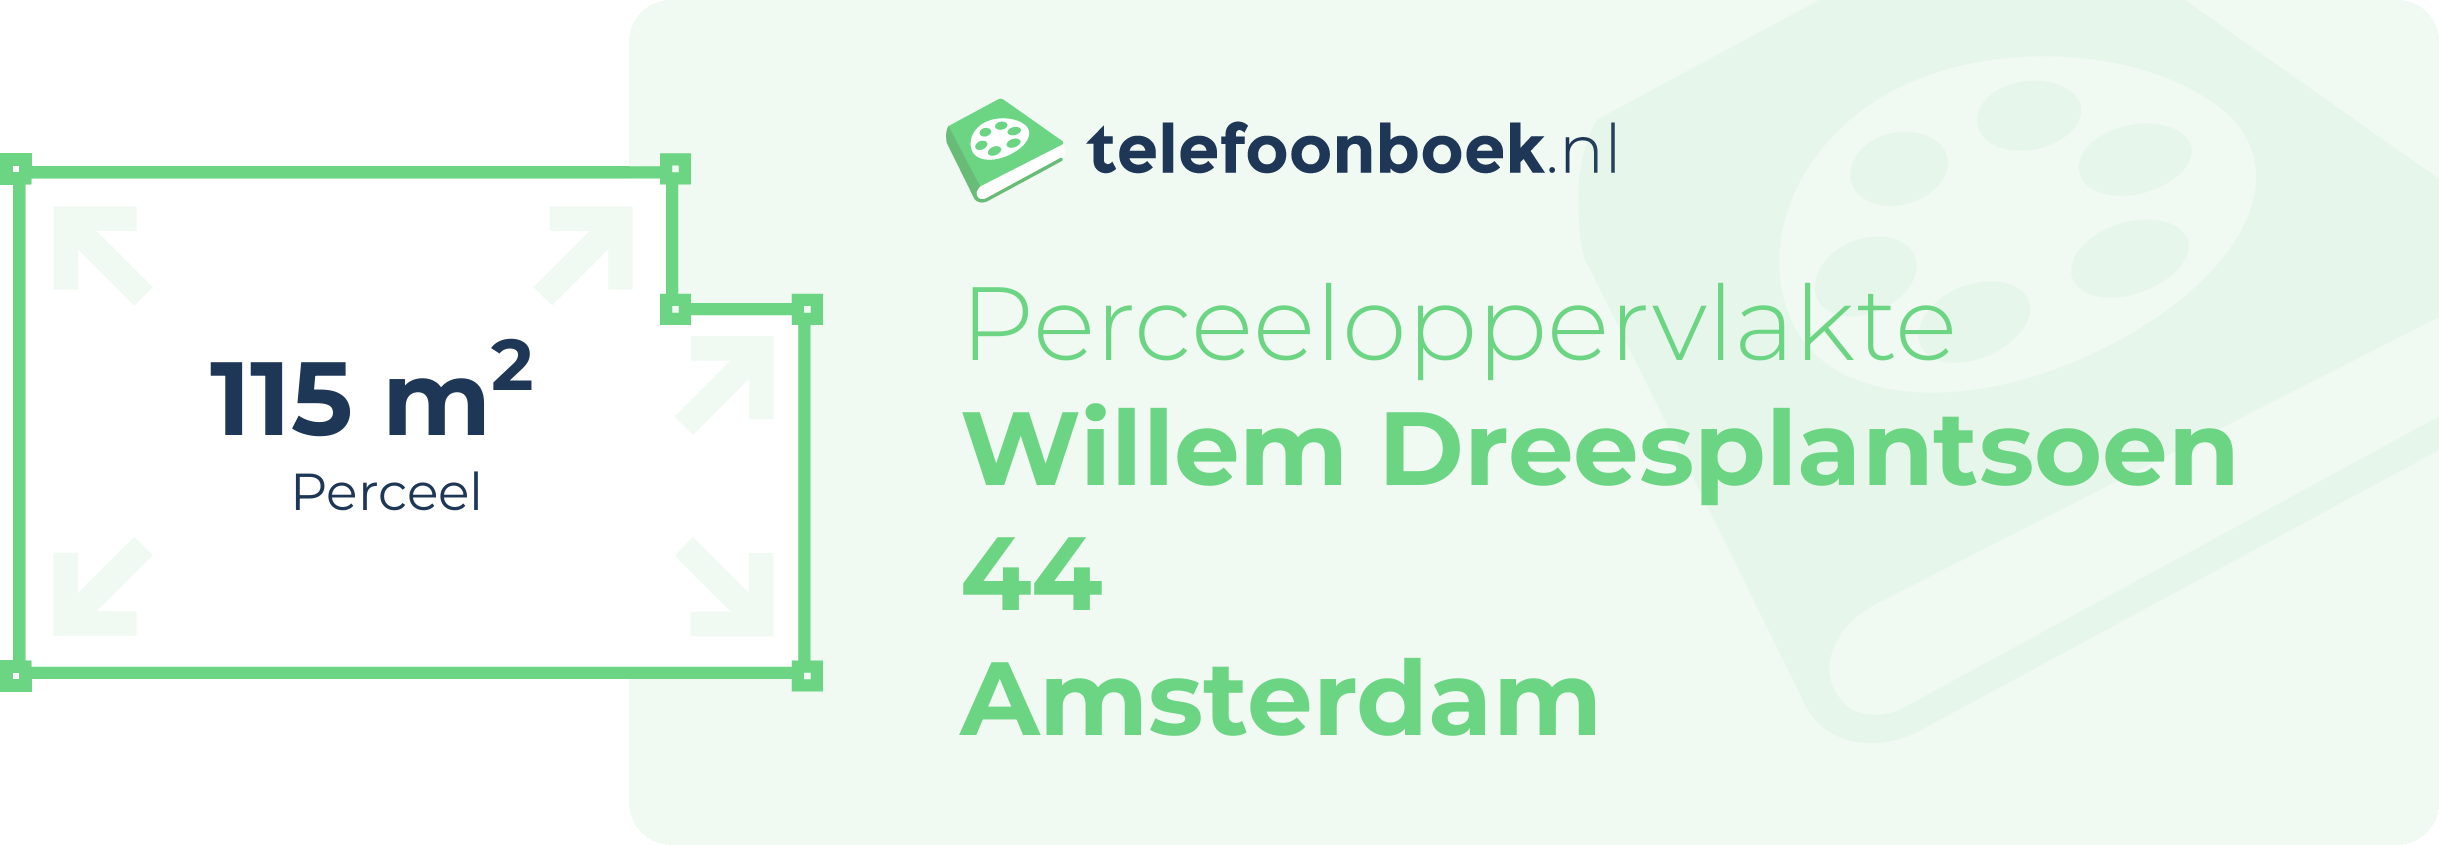 Perceeloppervlakte Willem Dreesplantsoen 44 Amsterdam